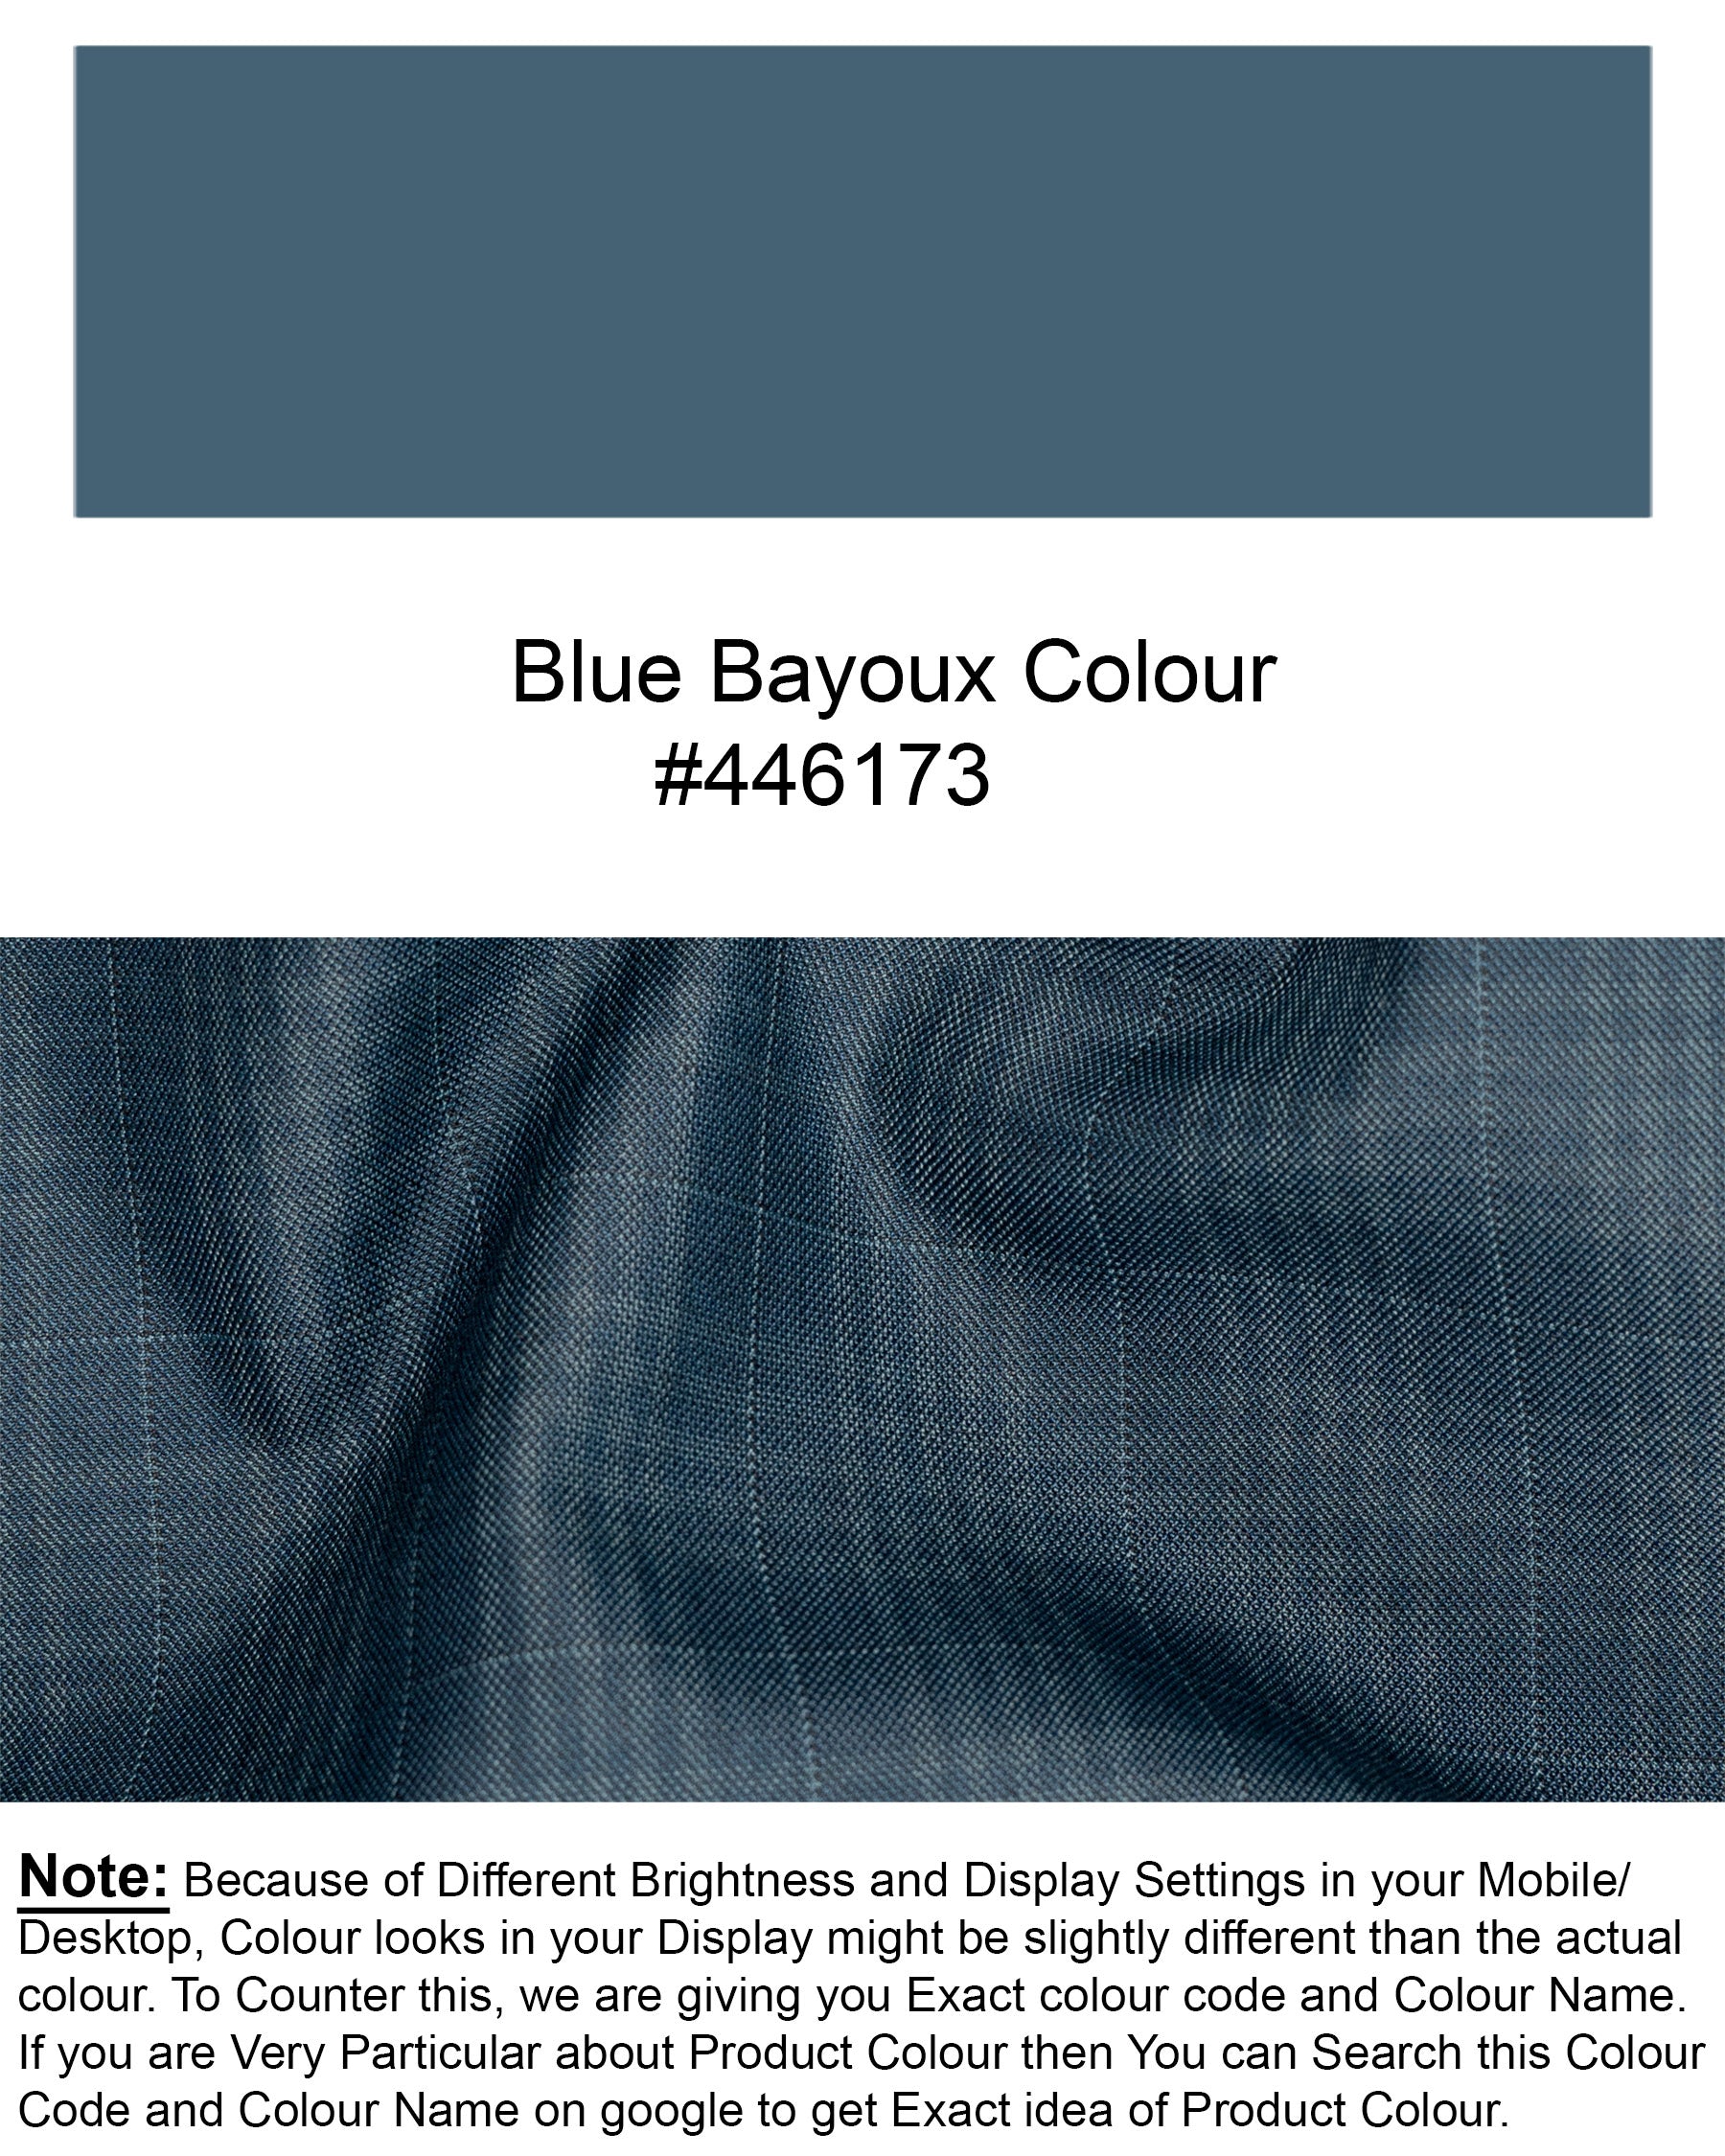 Blue Bayoux Checkered Wool Rich Suit ST1588-SB-36, ST1588-SB-38, ST1588-SB-40, ST1588-SB-42, ST1588-SB-44, ST1588-SB-46, ST1588-SB-48, ST1588-SB-50, ST1588-SB-52, ST1588-SB-54, ST1588-SB-56, ST1588-SB-58, ST1588-SB-60